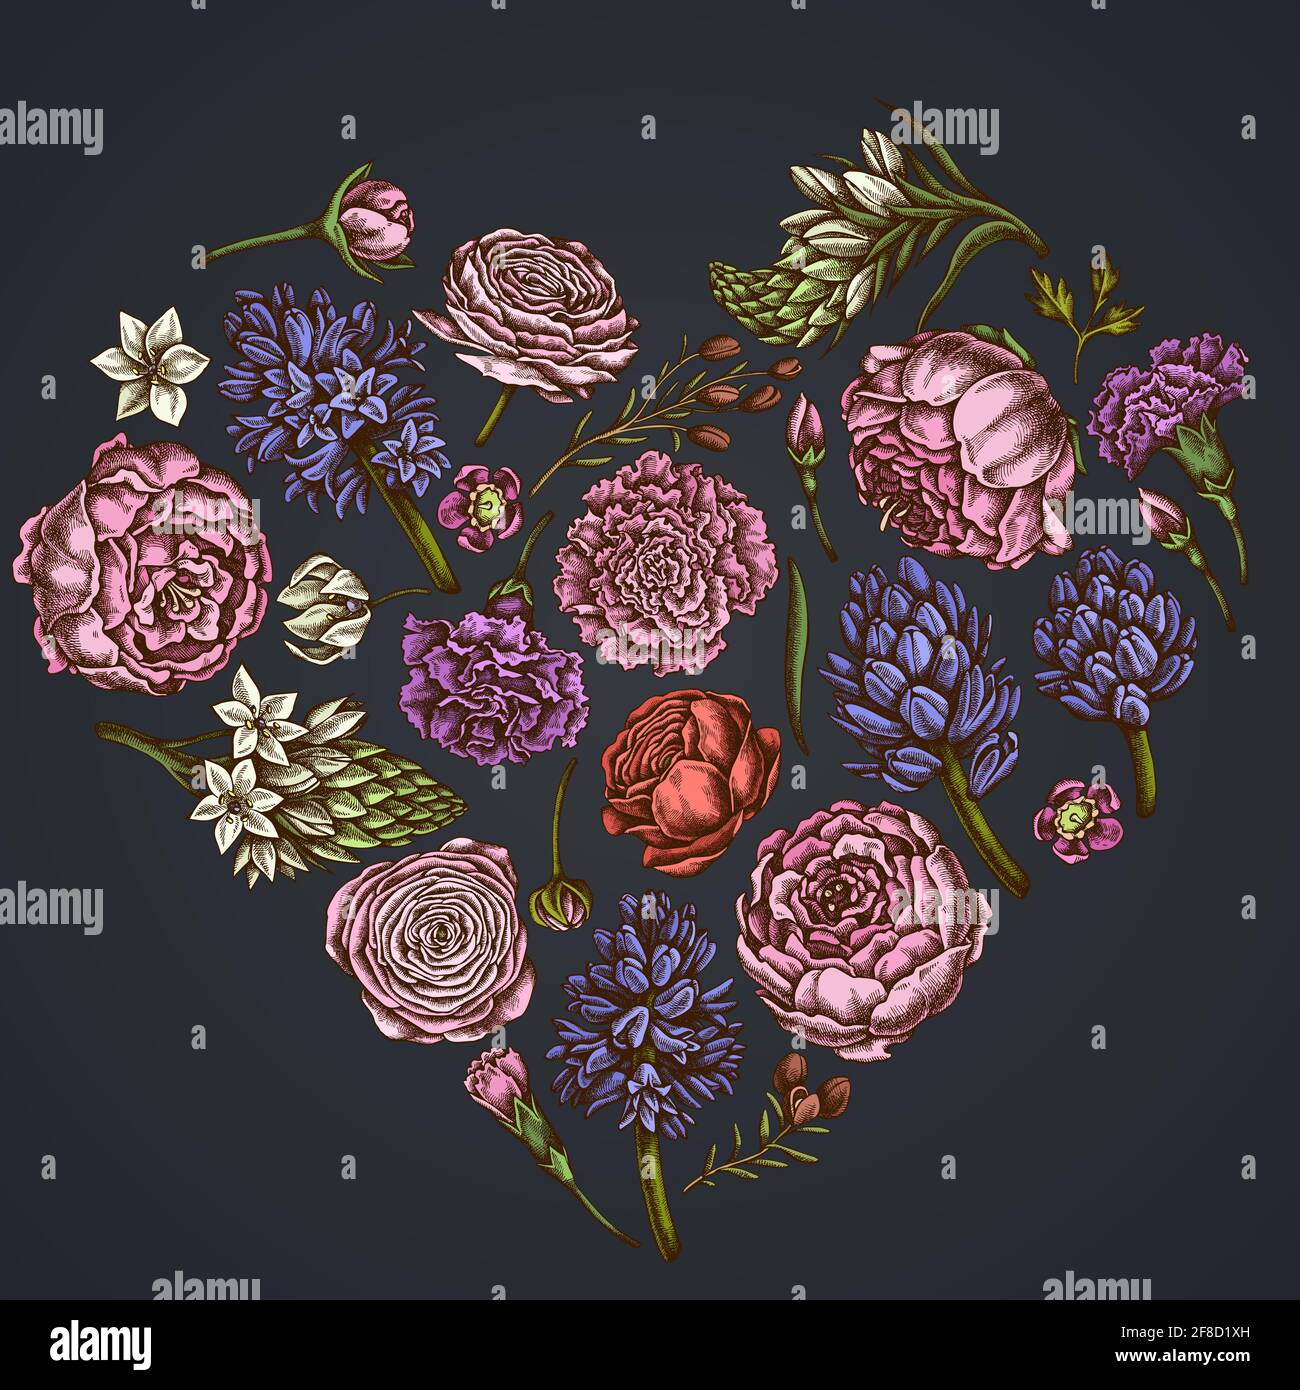 Heart floral design on dark background with peony, carnation, ranunculus, wax flower, ornithogalum, hyacinth Stock Vector